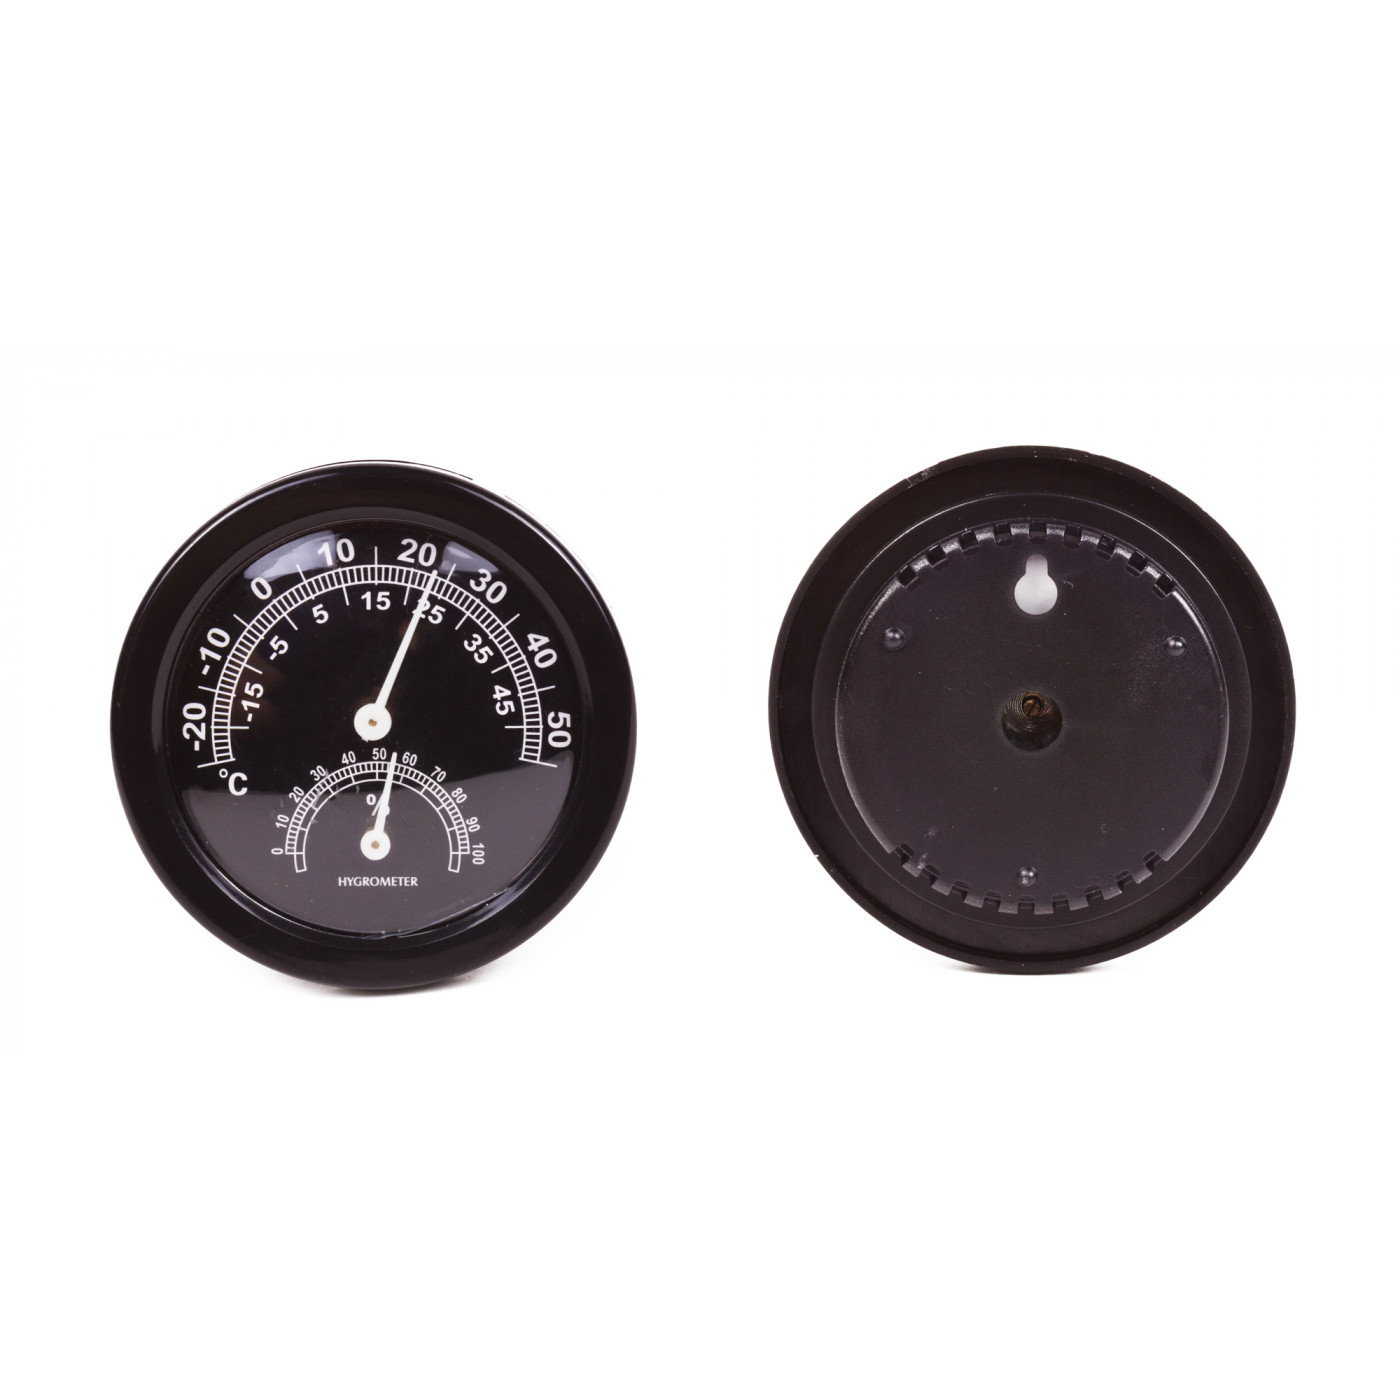 Temperature and humidity meter (round, black)